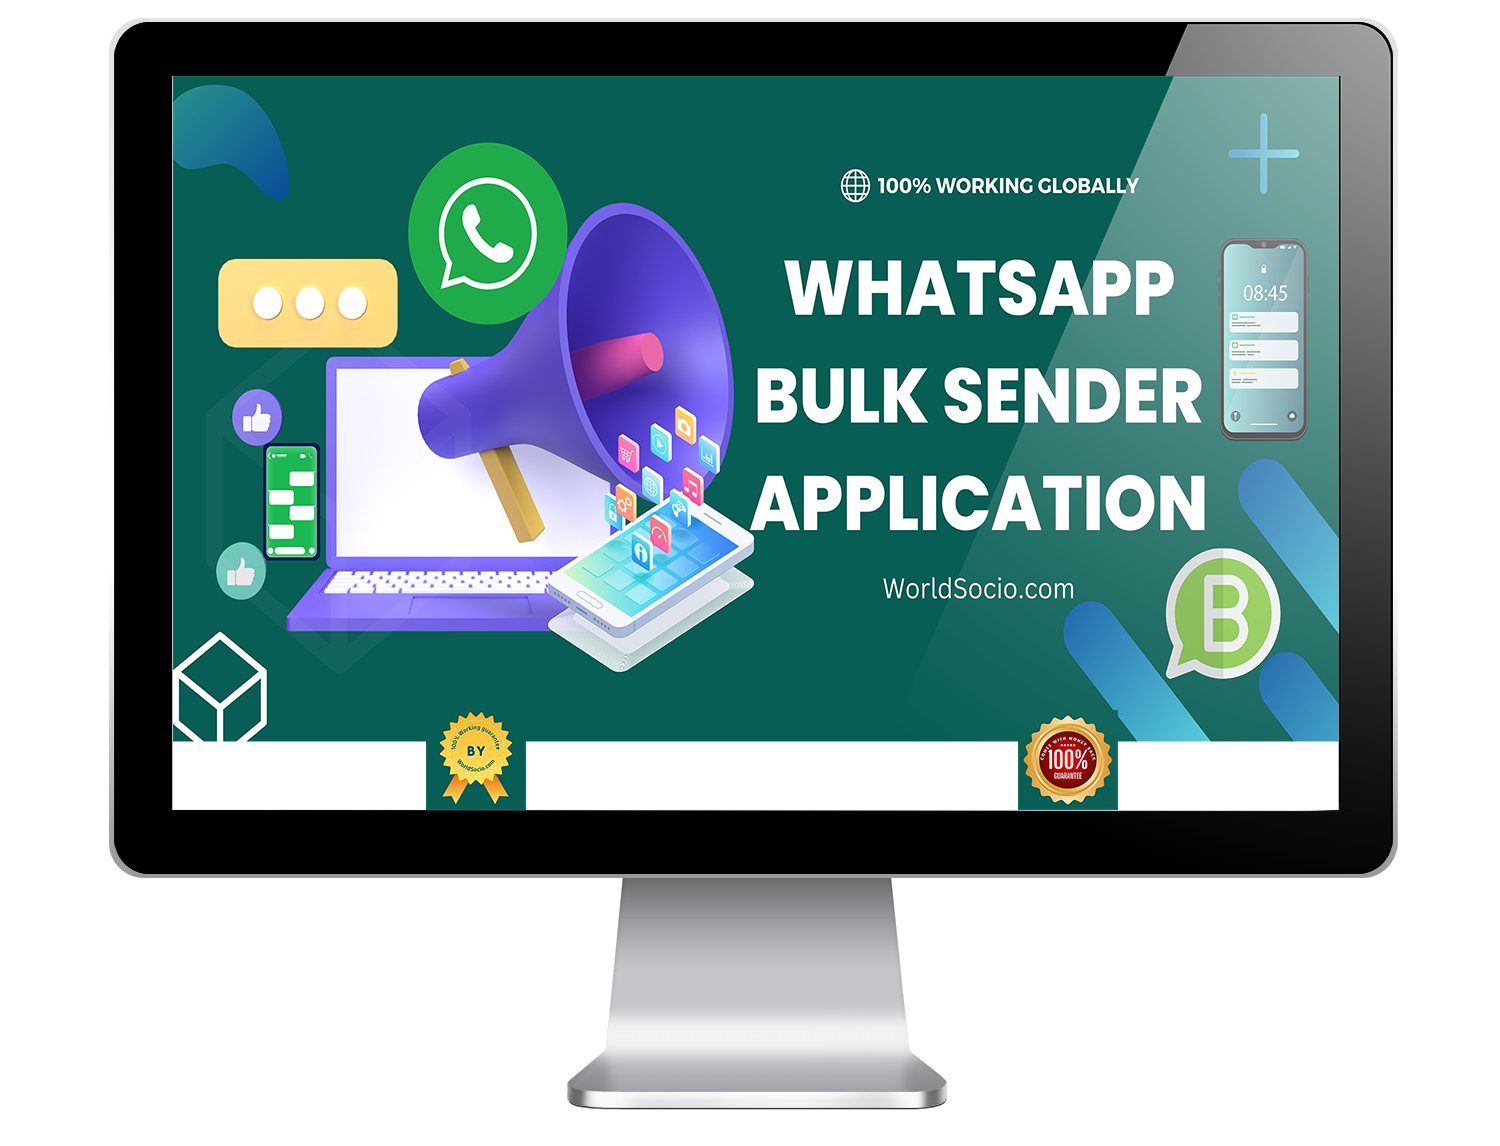 Whatsapp-bulk-sender-application-3.png